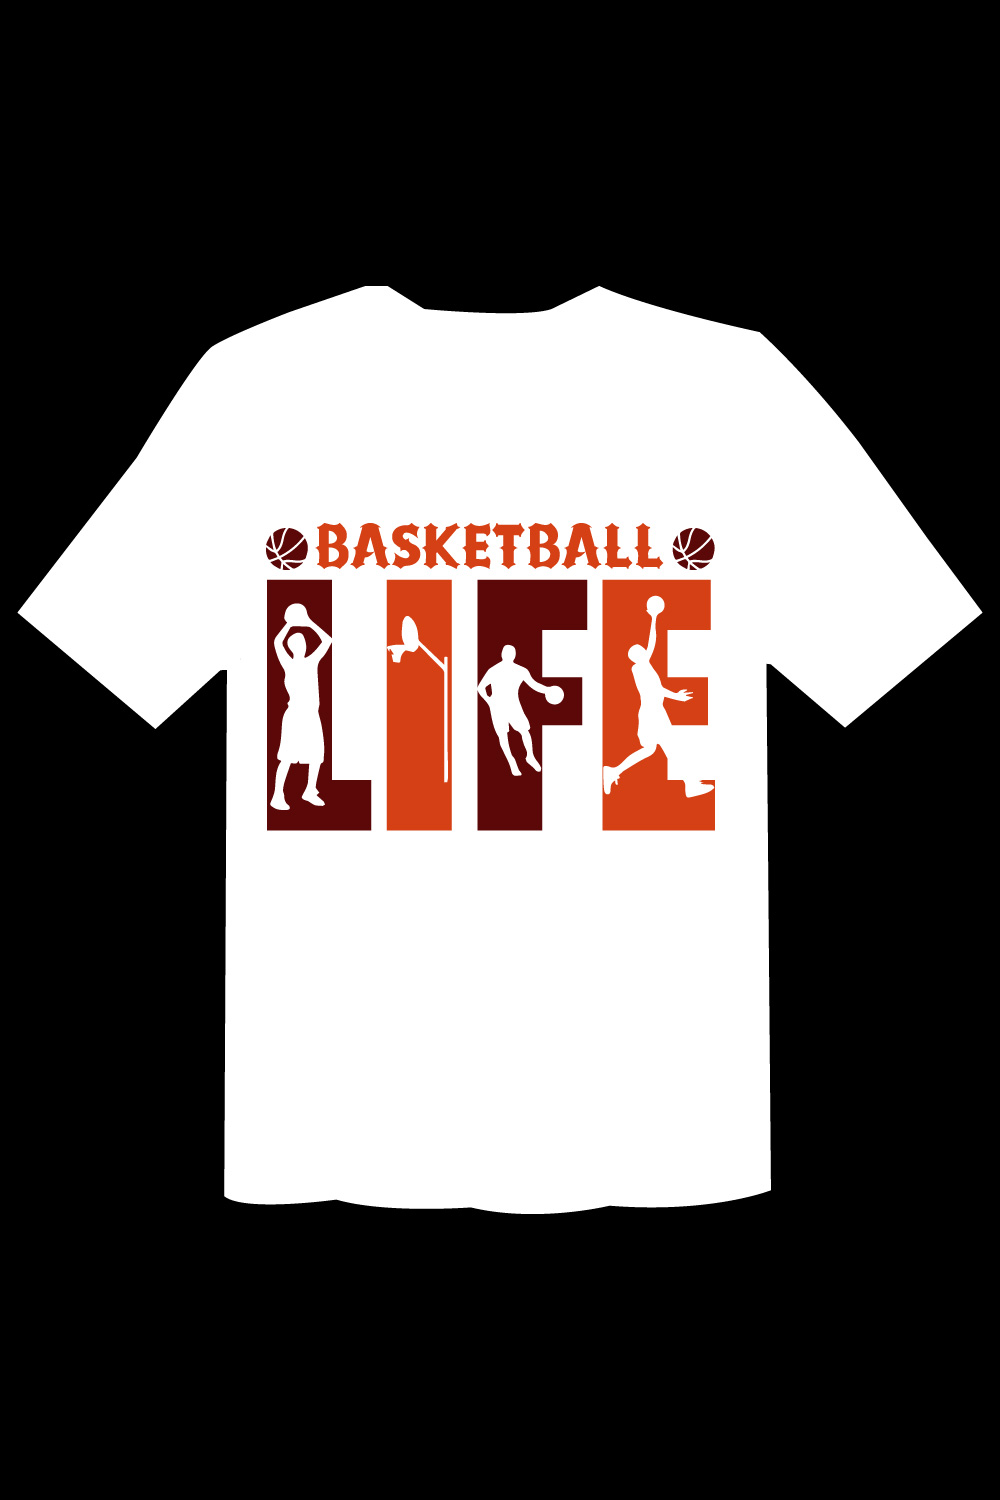 Basketball Life T Shirt Cut File Design pinterest preview image.